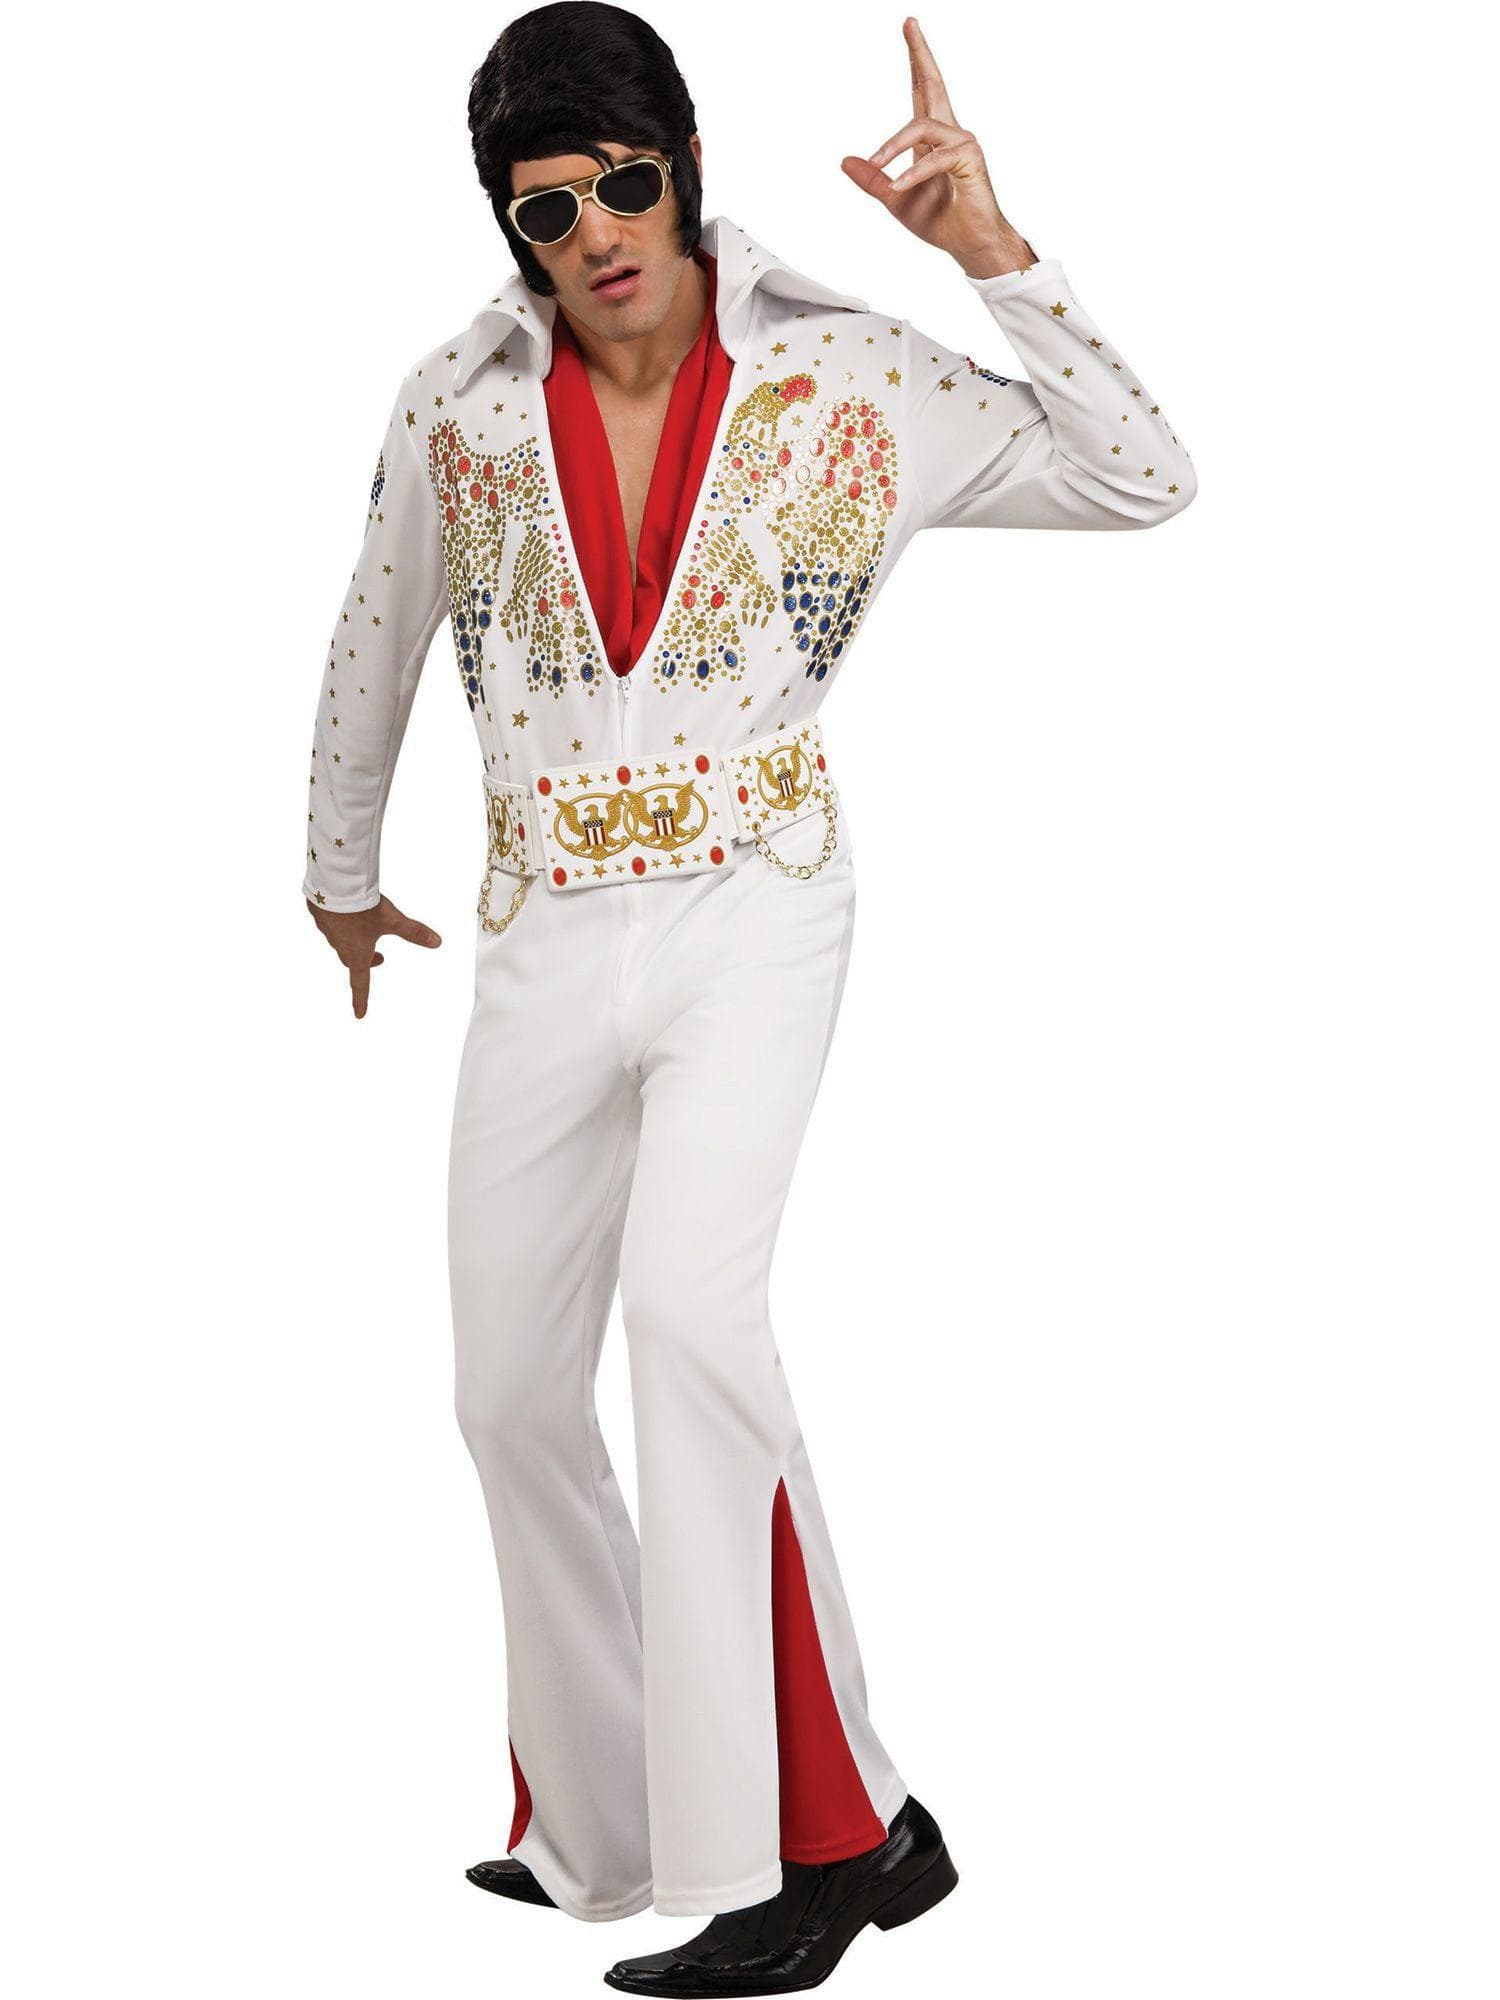 Men's Elvis Costume - Deluxe - costumes.com